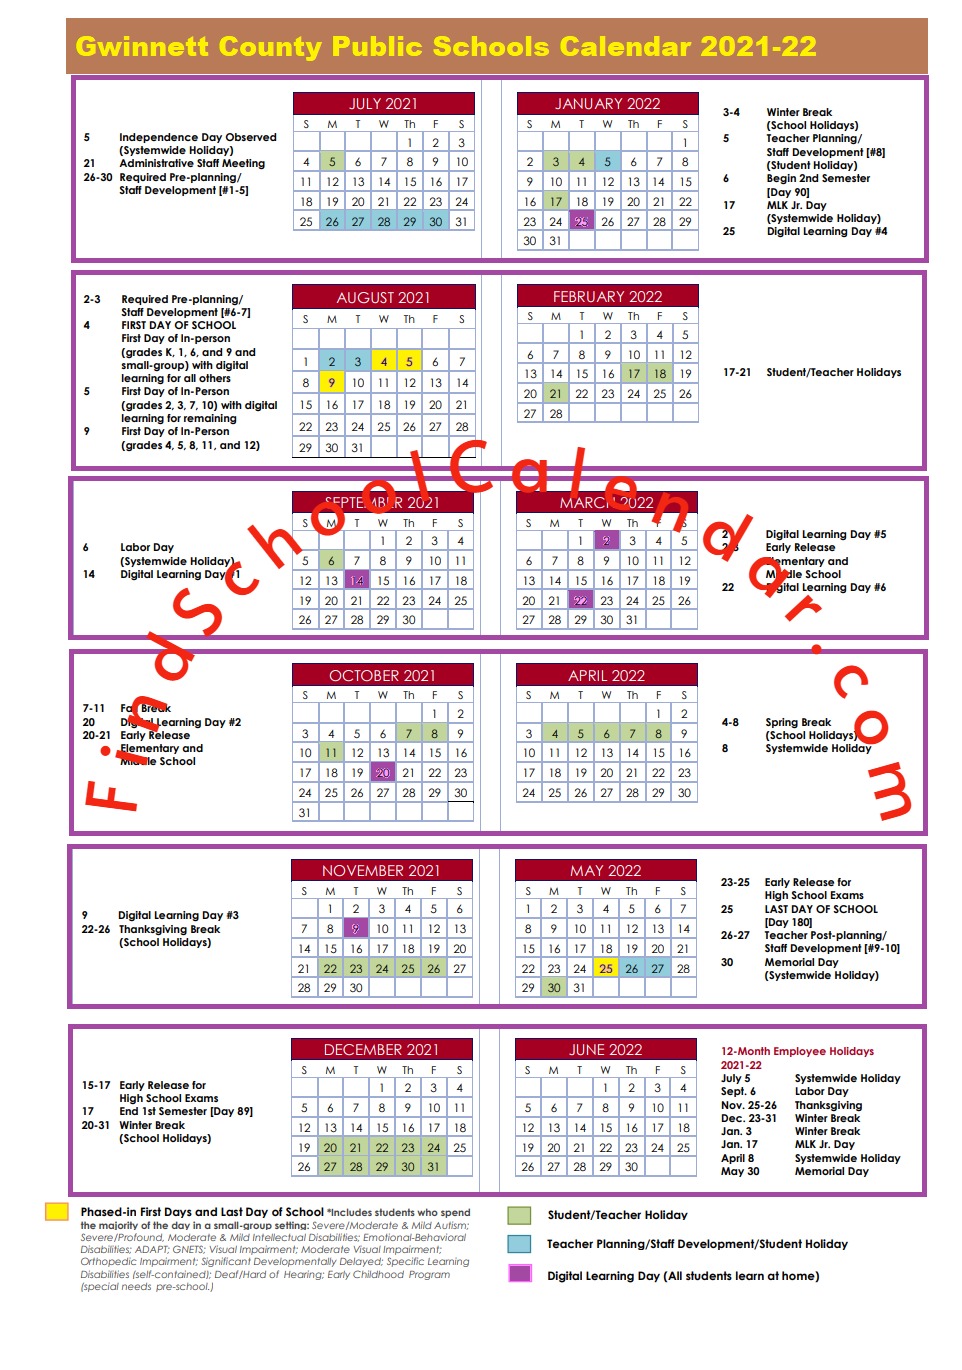 Gwinnett County Calendar 2022 Gwinnett County School Calendar 2021-2022 | Holidays & Break Schedule